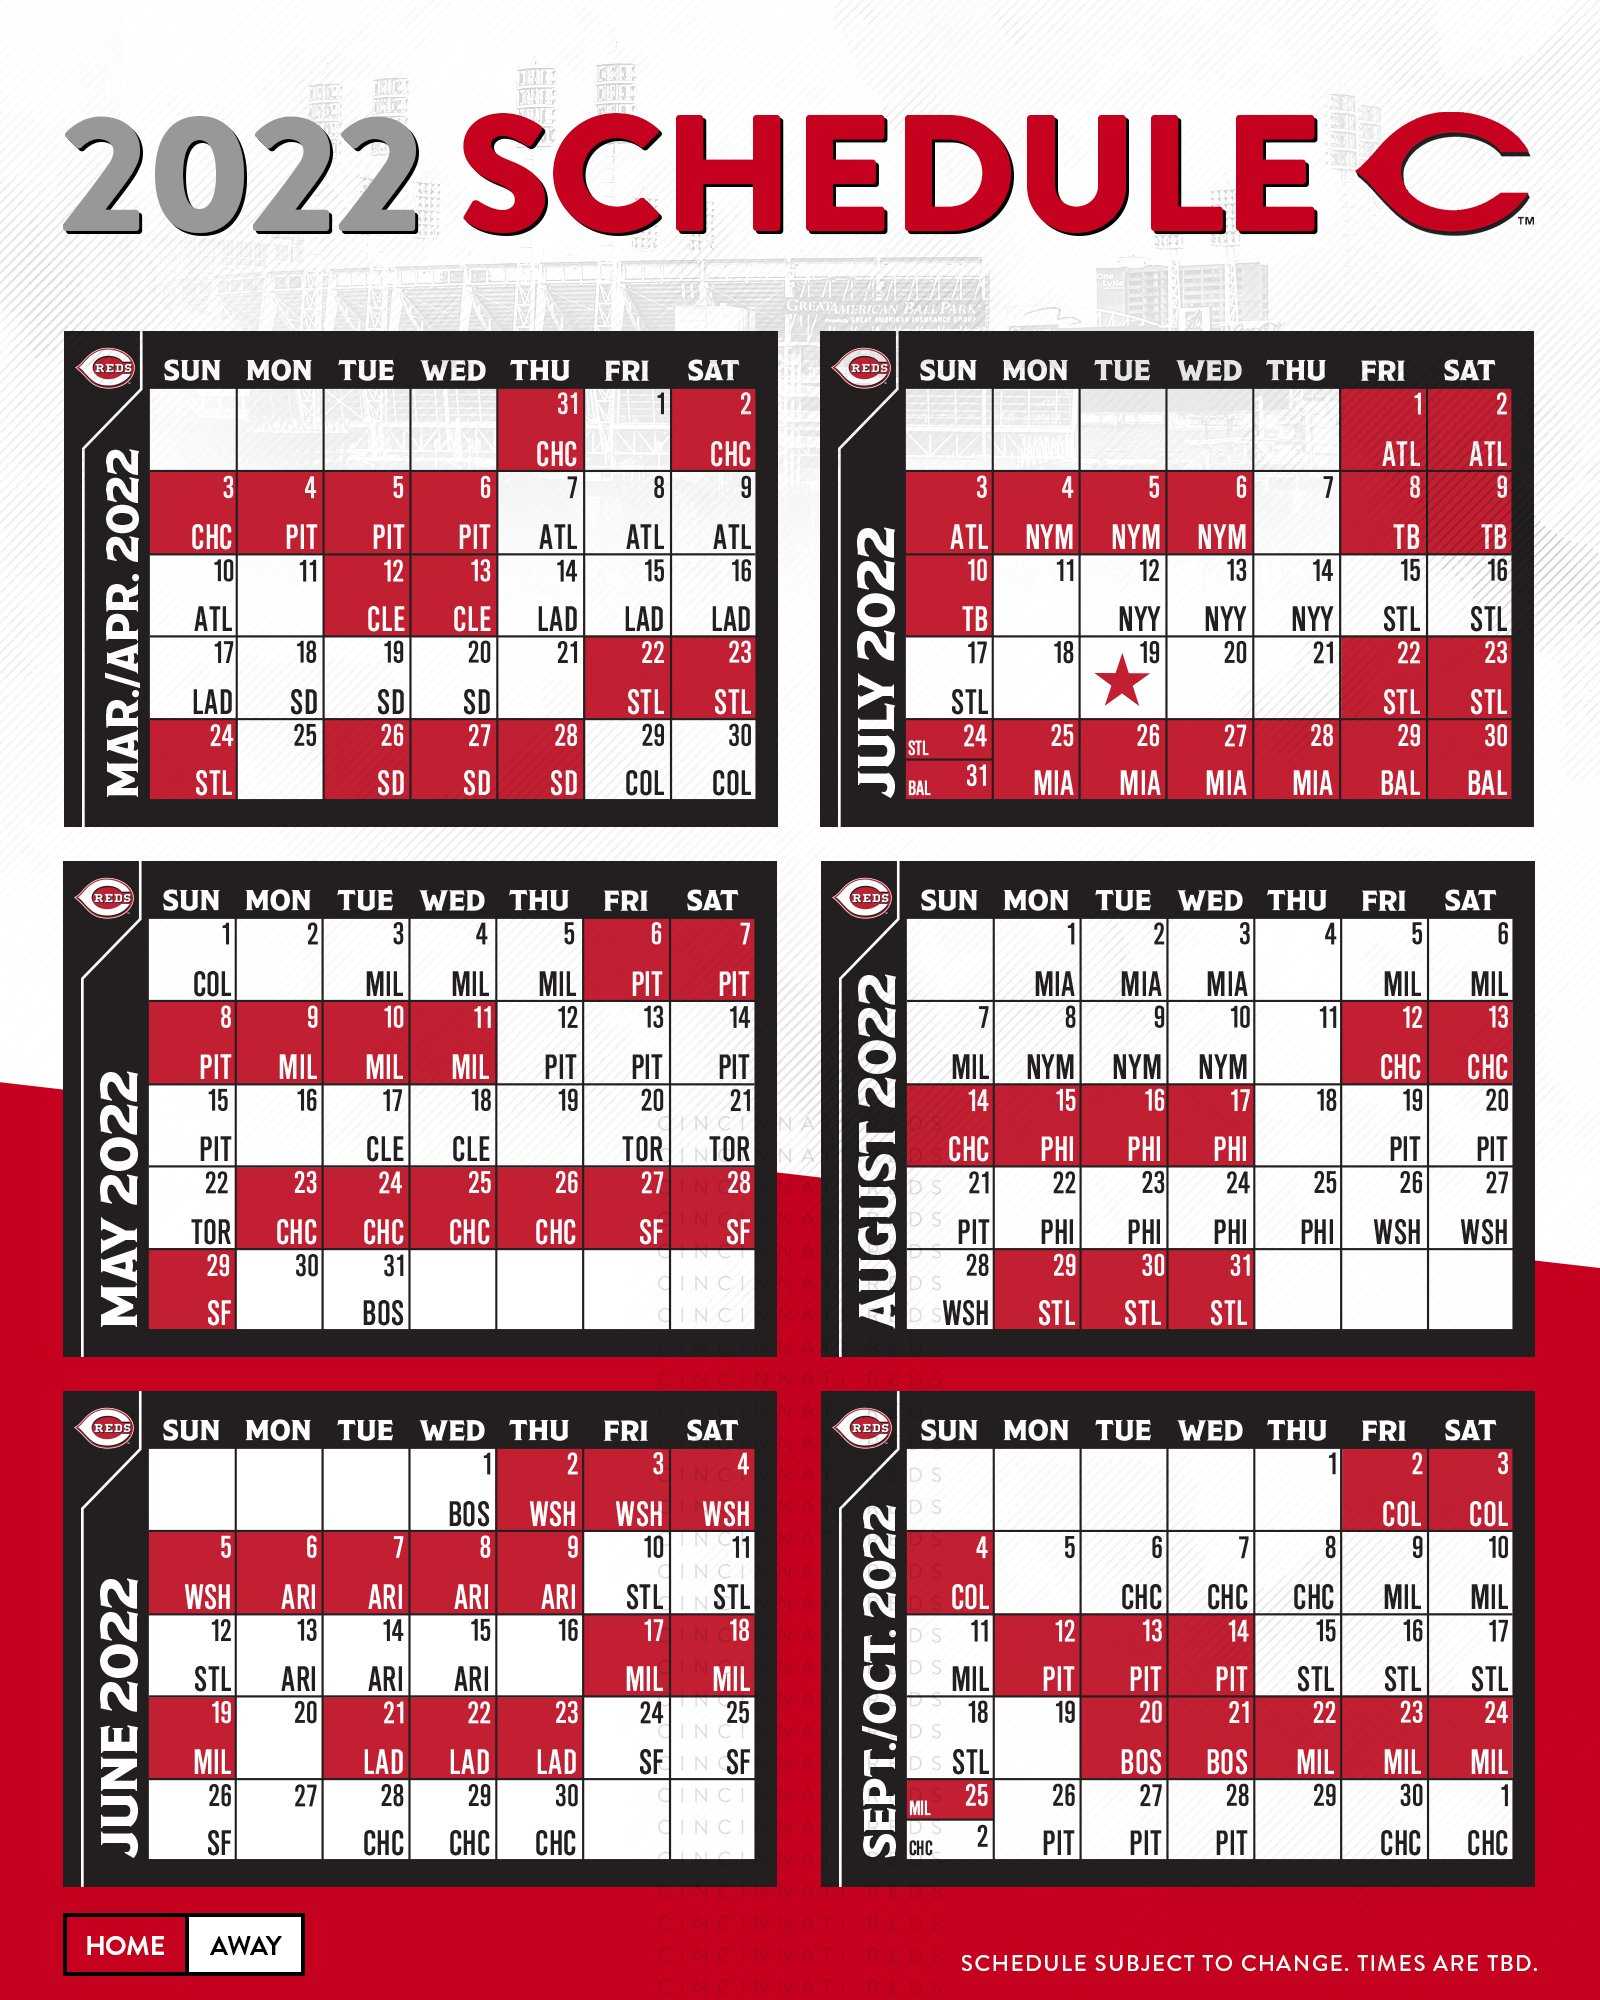 Mlb Schedule 2022 Cincinnati Reds Release 2022 Schedule: Here Are The Highlights